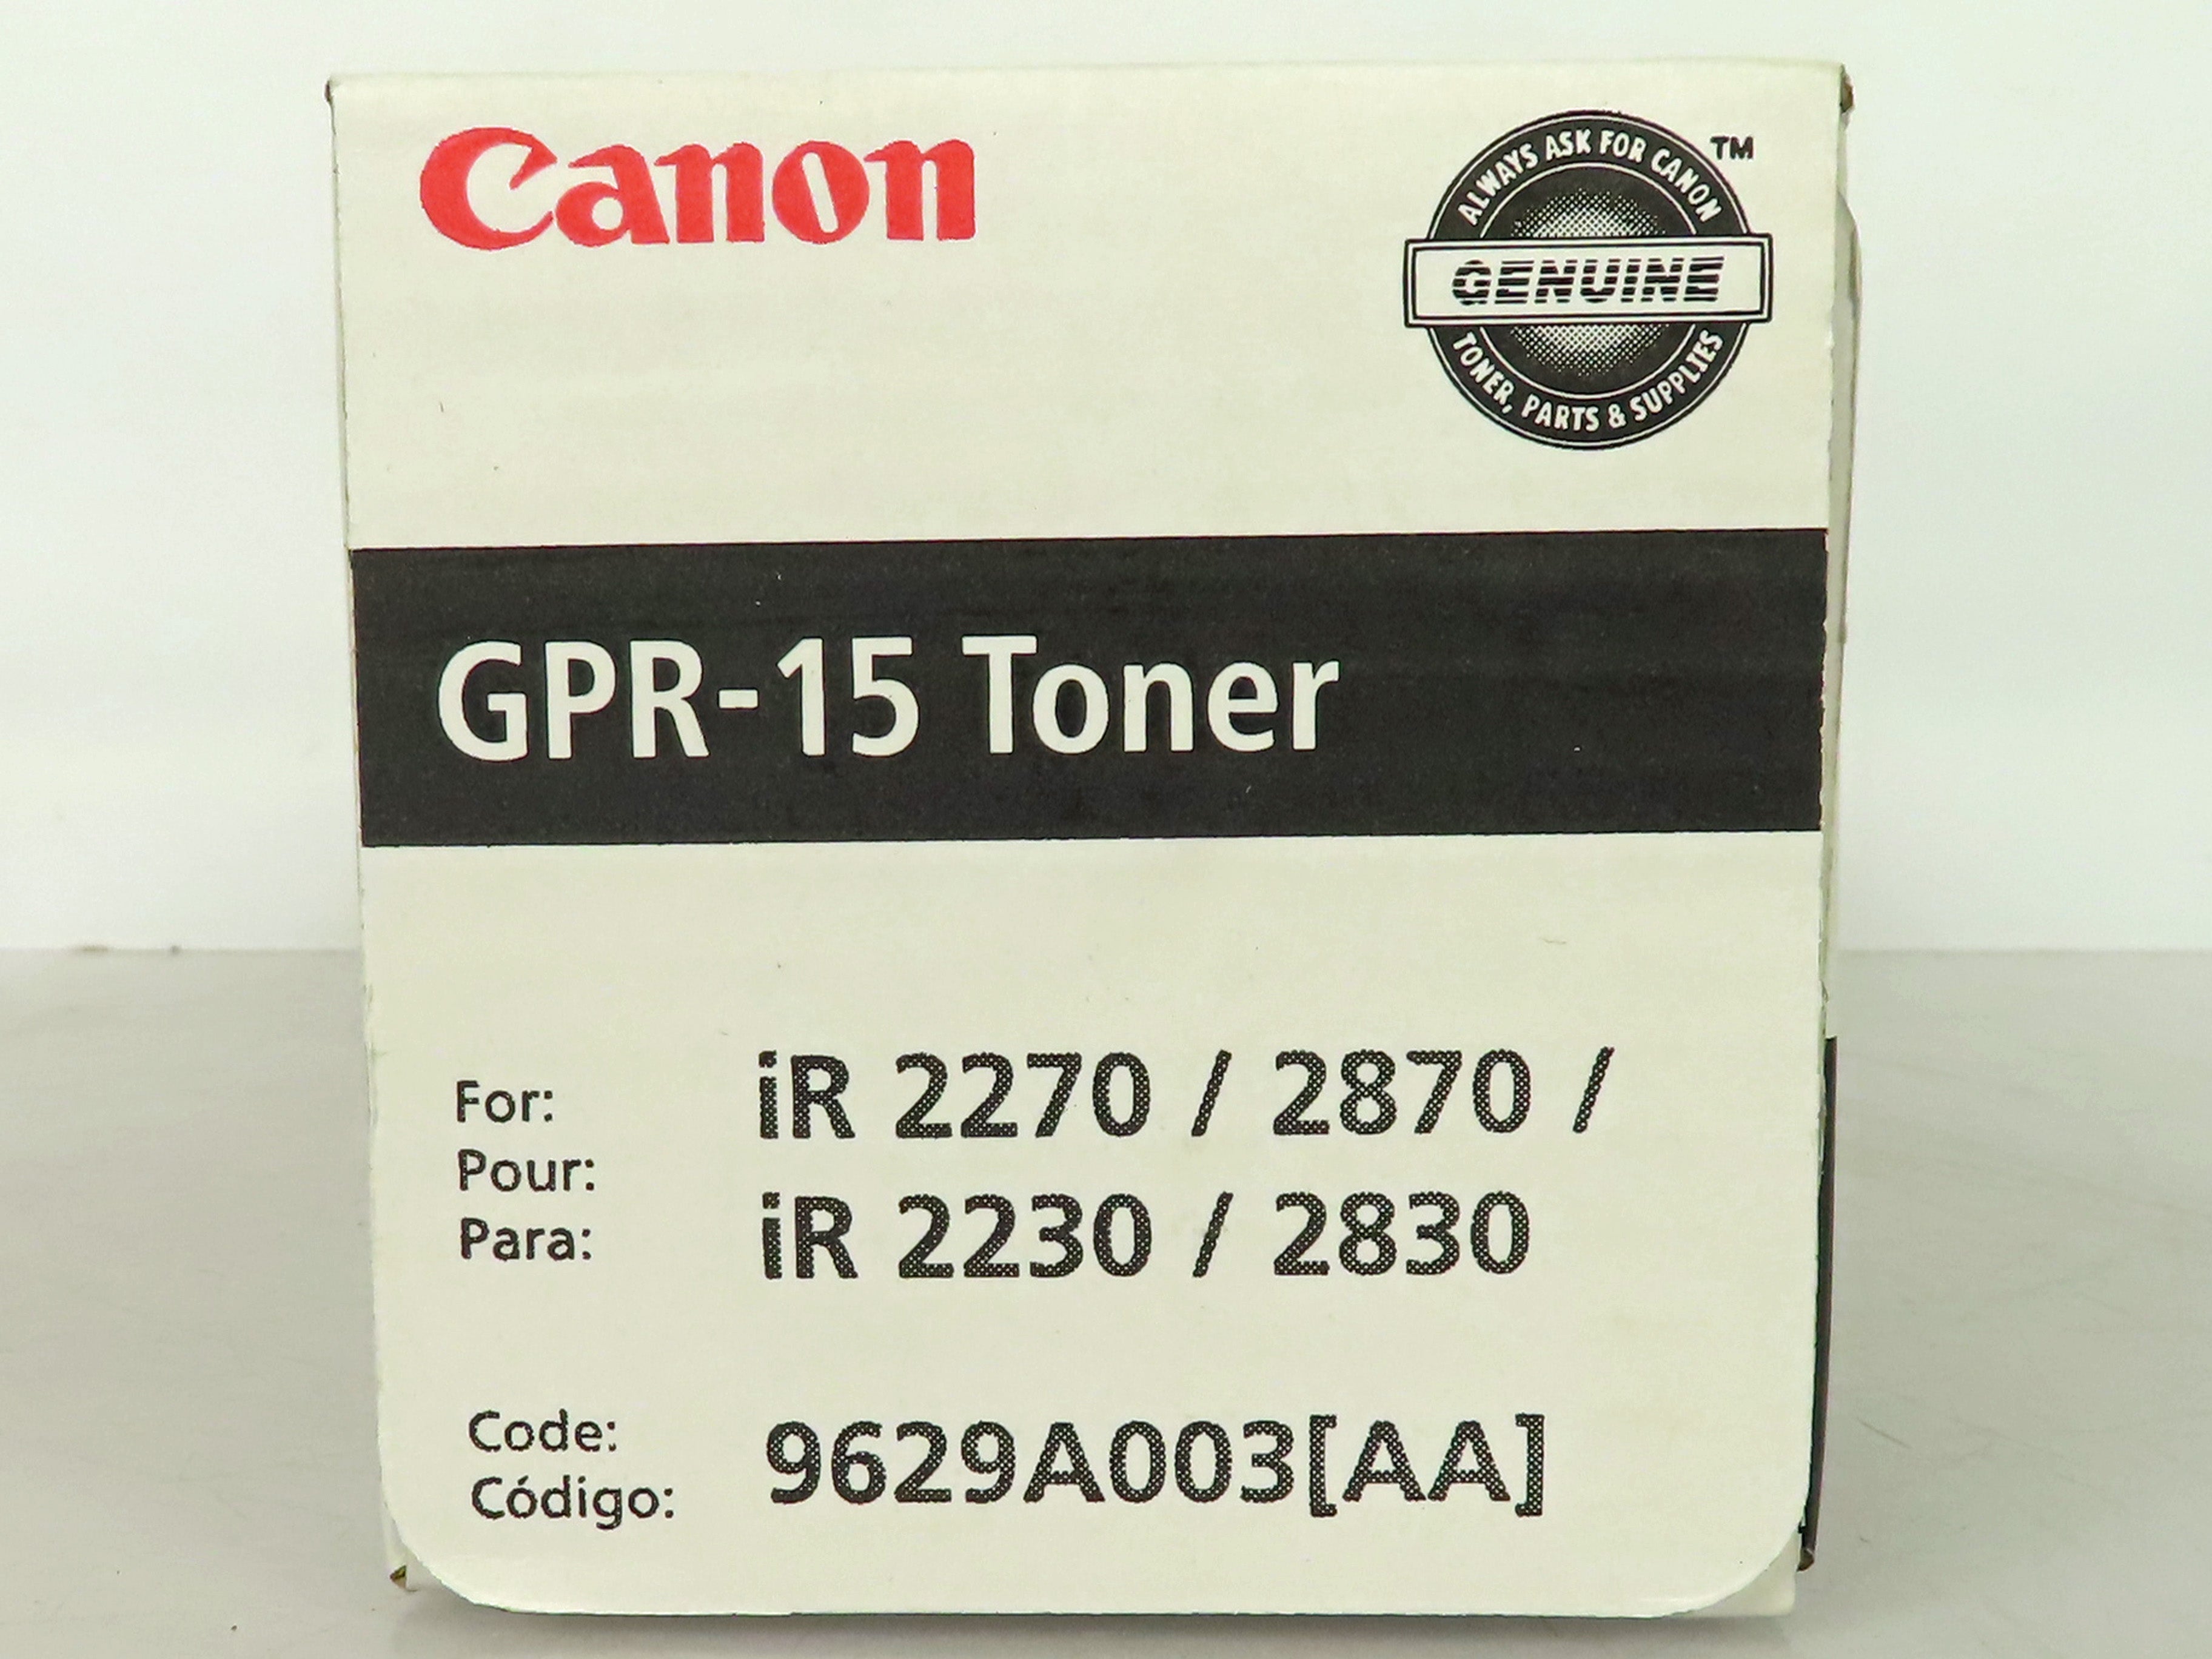 Canon GPR-15 9629A003[AA] Black Copier Toner Cartridge